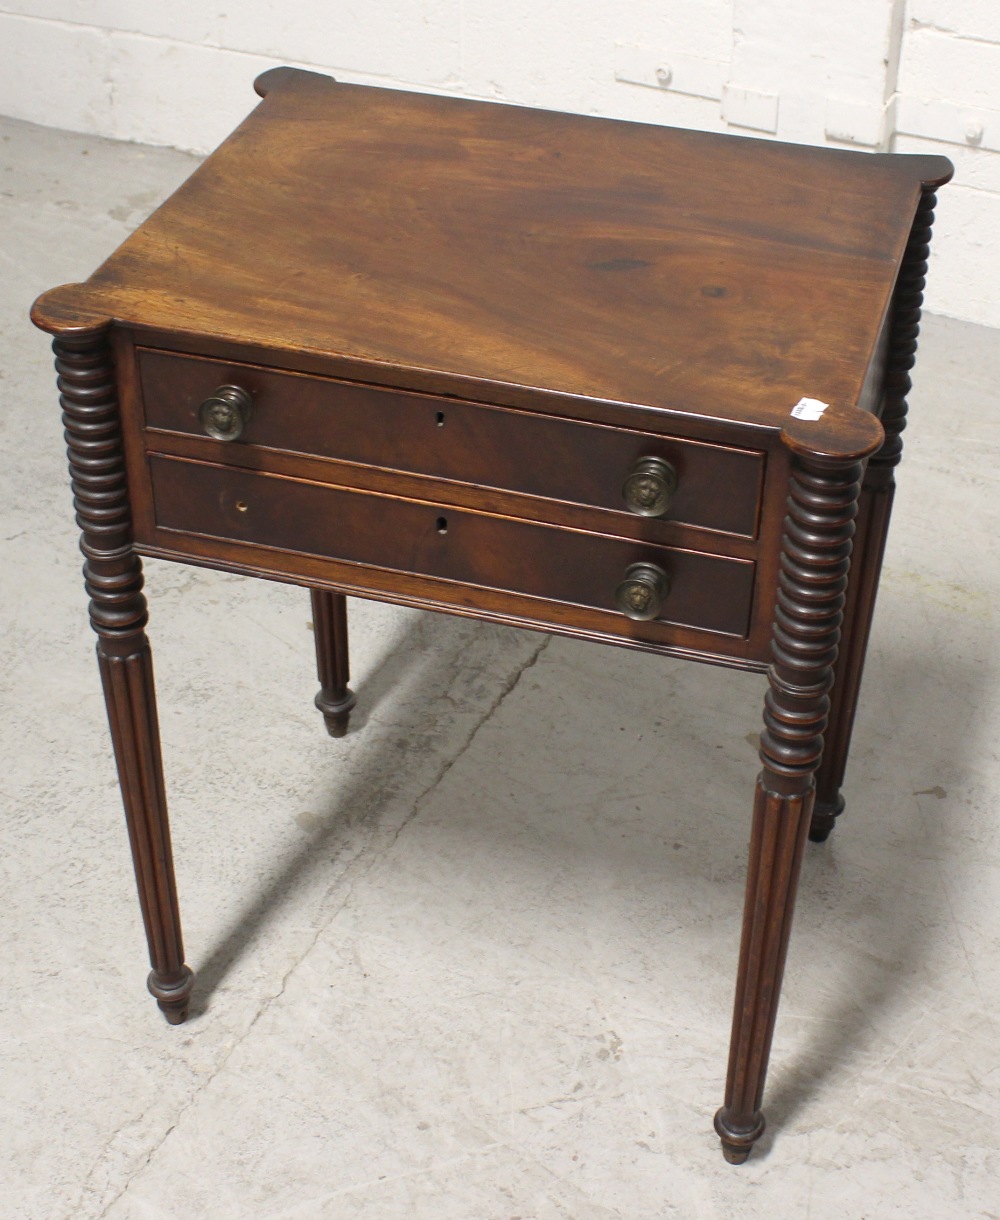 A 19th century American mahogany side table,